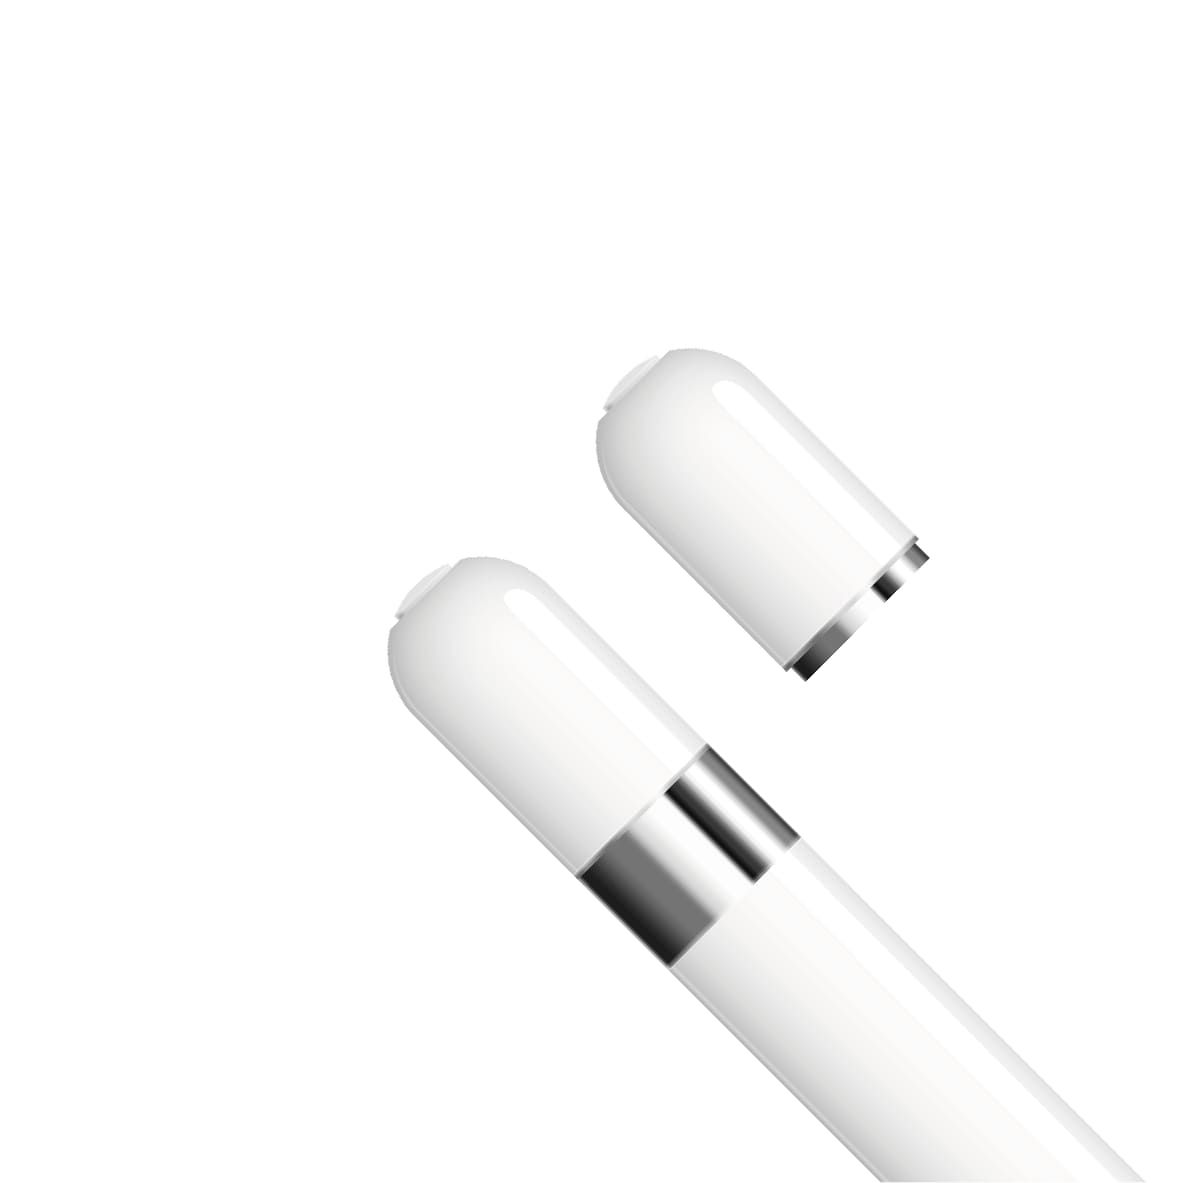 Fixed Pincil Cap pro Apple Pencil 1 FIXPEC bílá